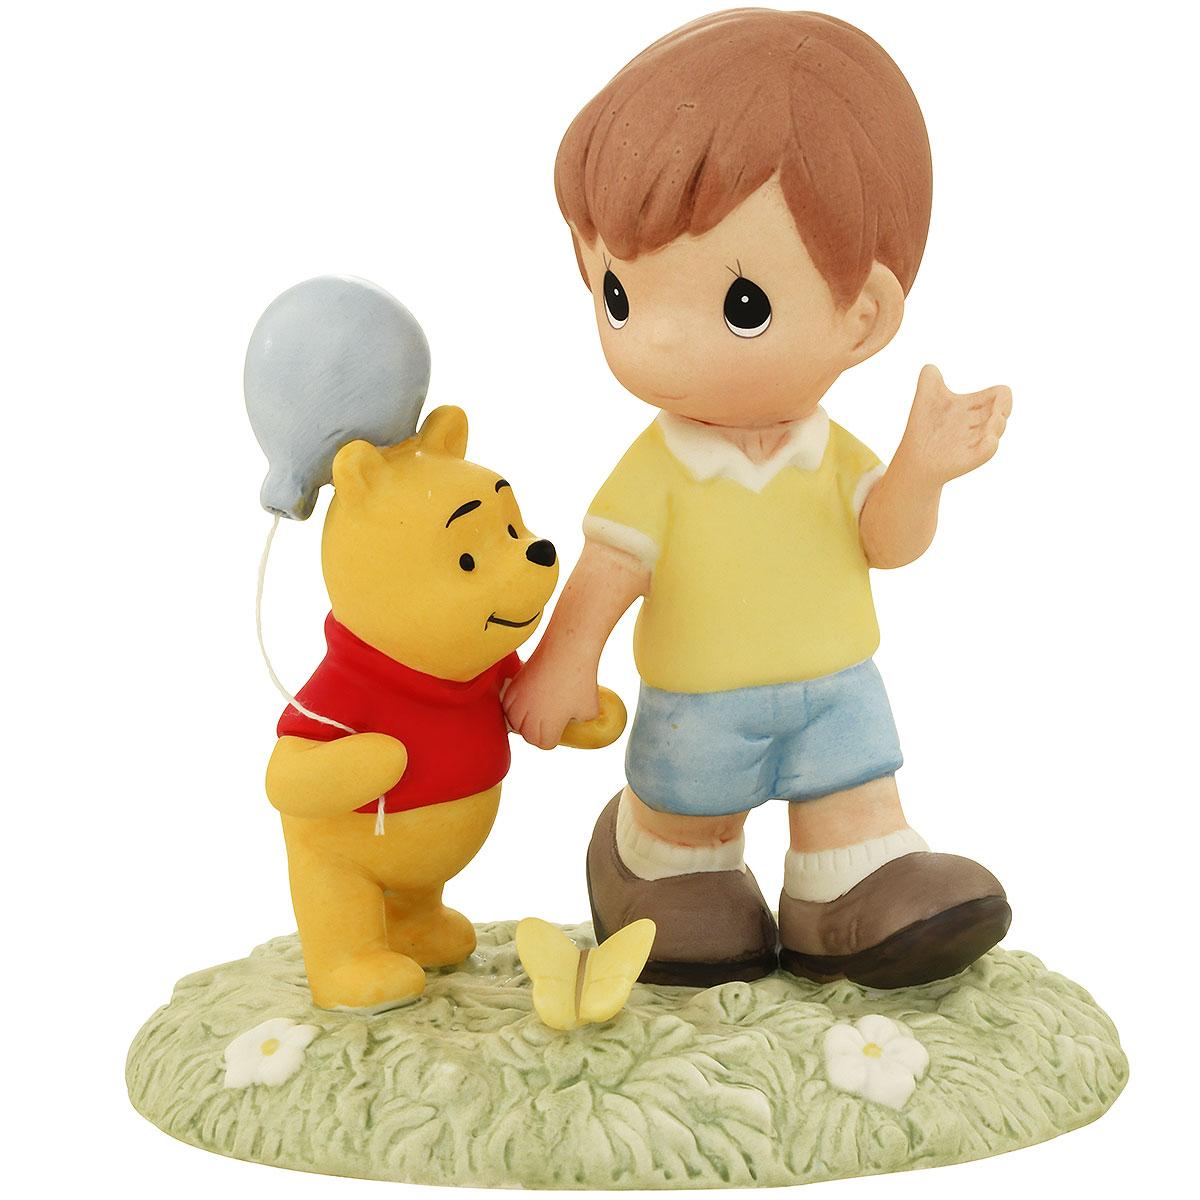 Always An Adventure Winnie The Pooh Disney Showcase Precious Moments Figurine